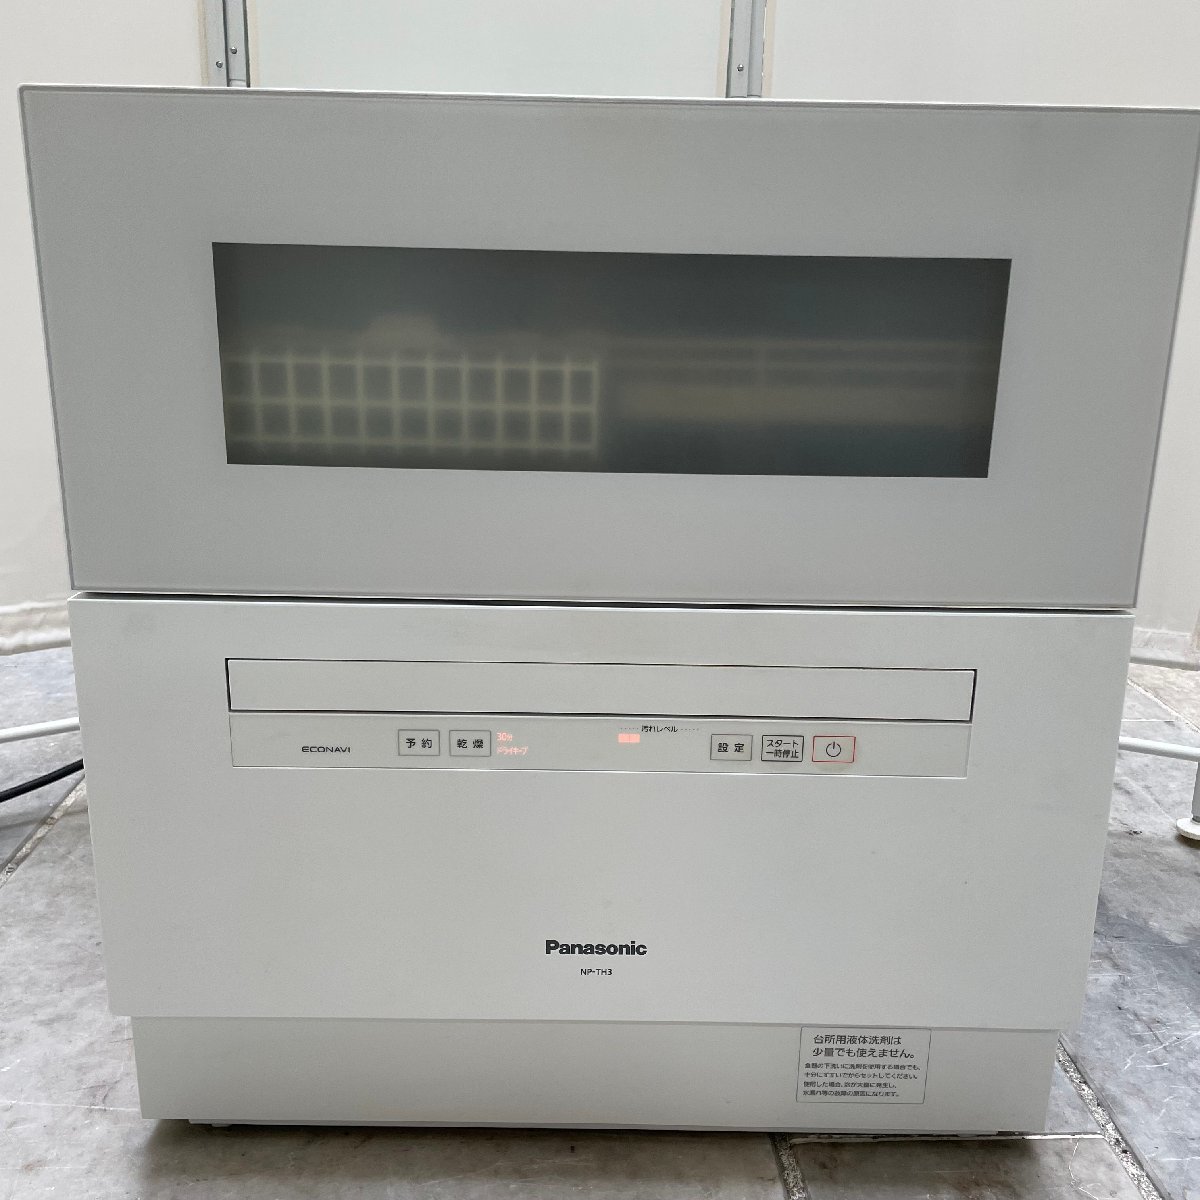 ♭OG♭ Panasonic 食器洗い乾燥機 NP-TH3 2019年製 中古品 家庭用 食洗機洗剤 ♭J-230907